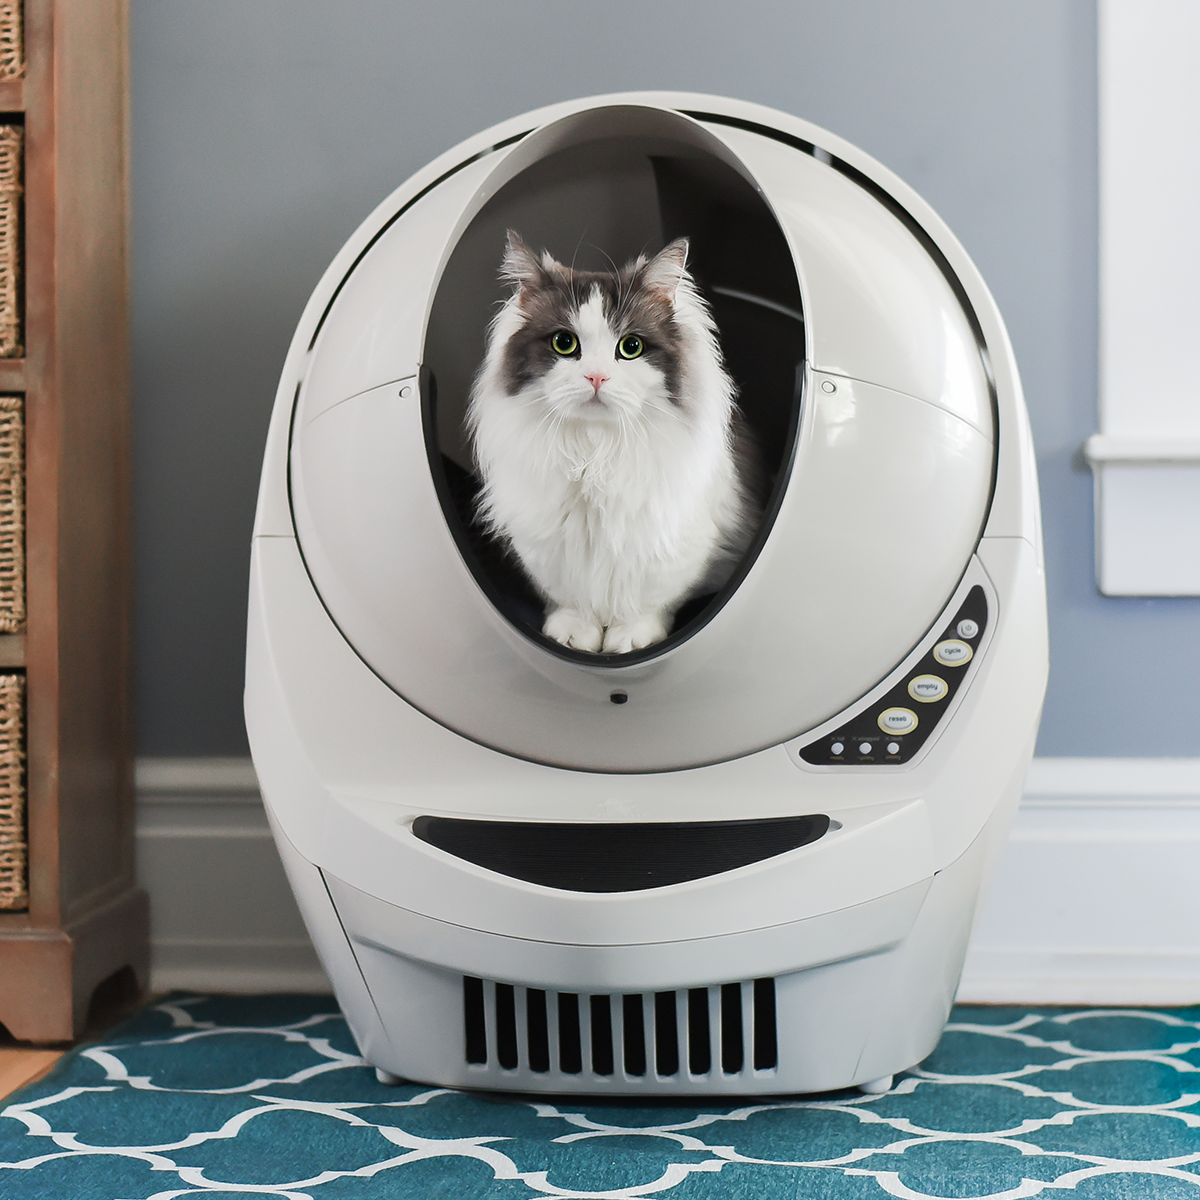 The Original Self-Cleaning Cat Litter Box